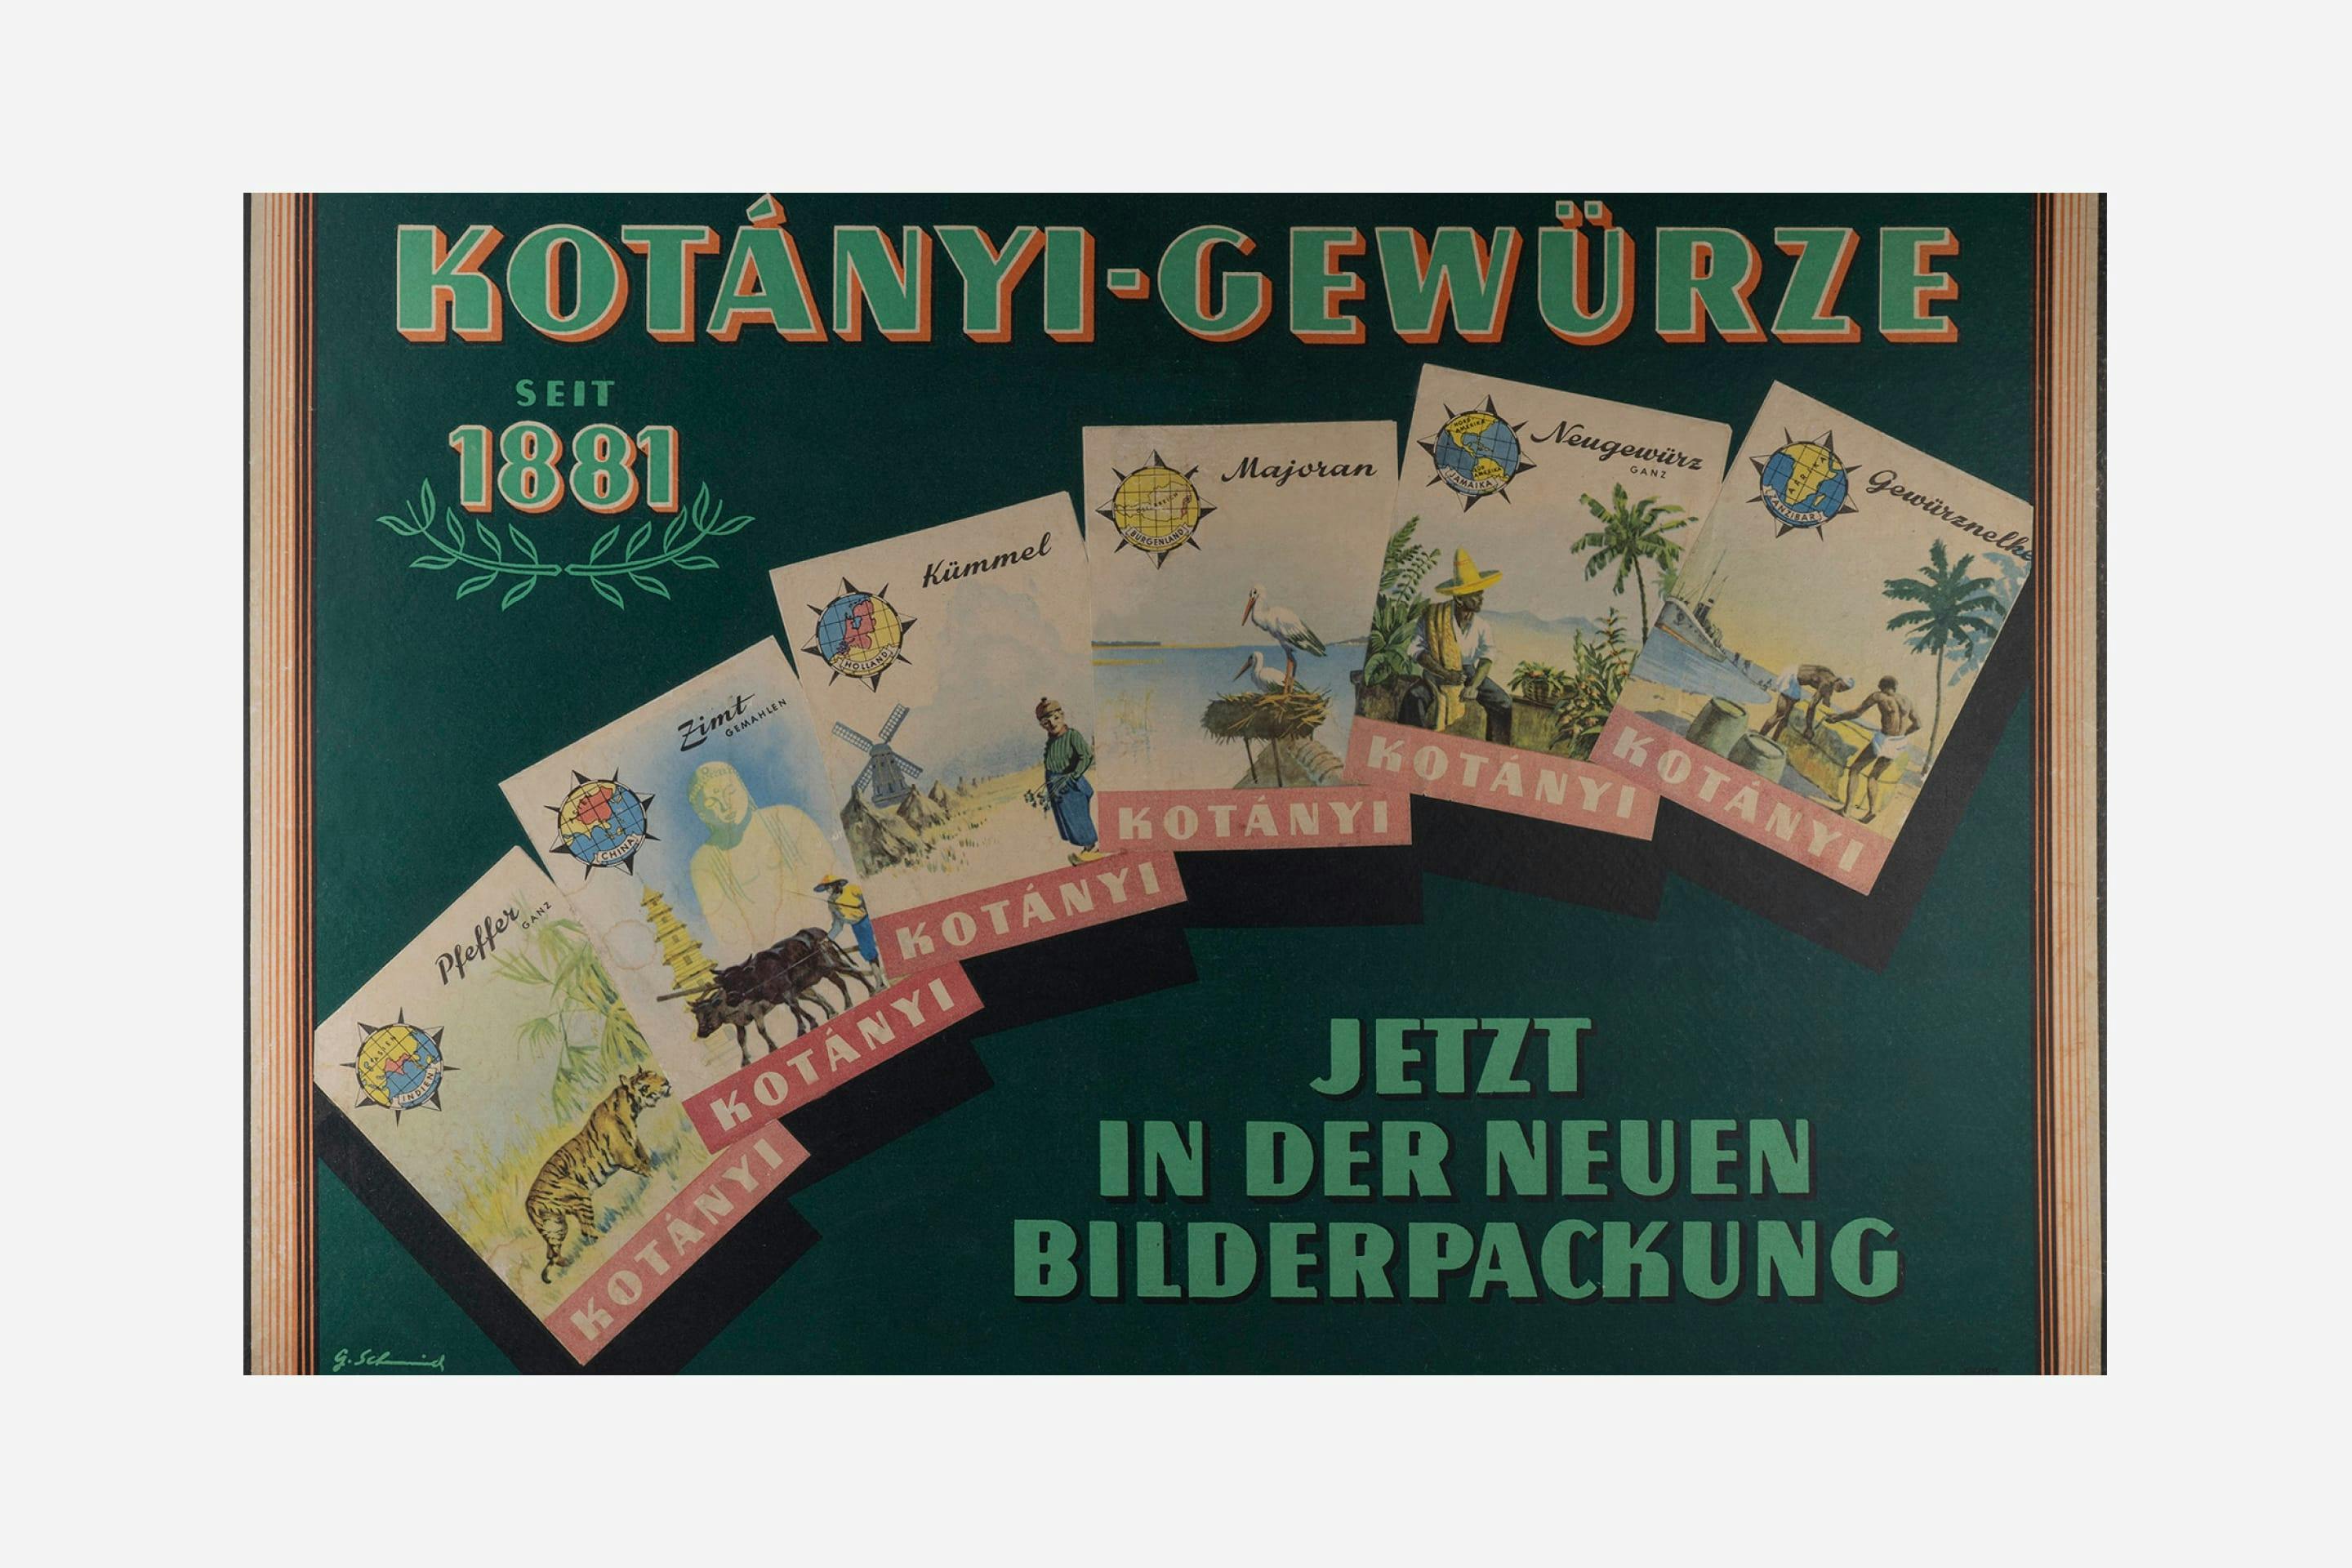 Kotányi advertising poster for illustrated sachets from 1970.